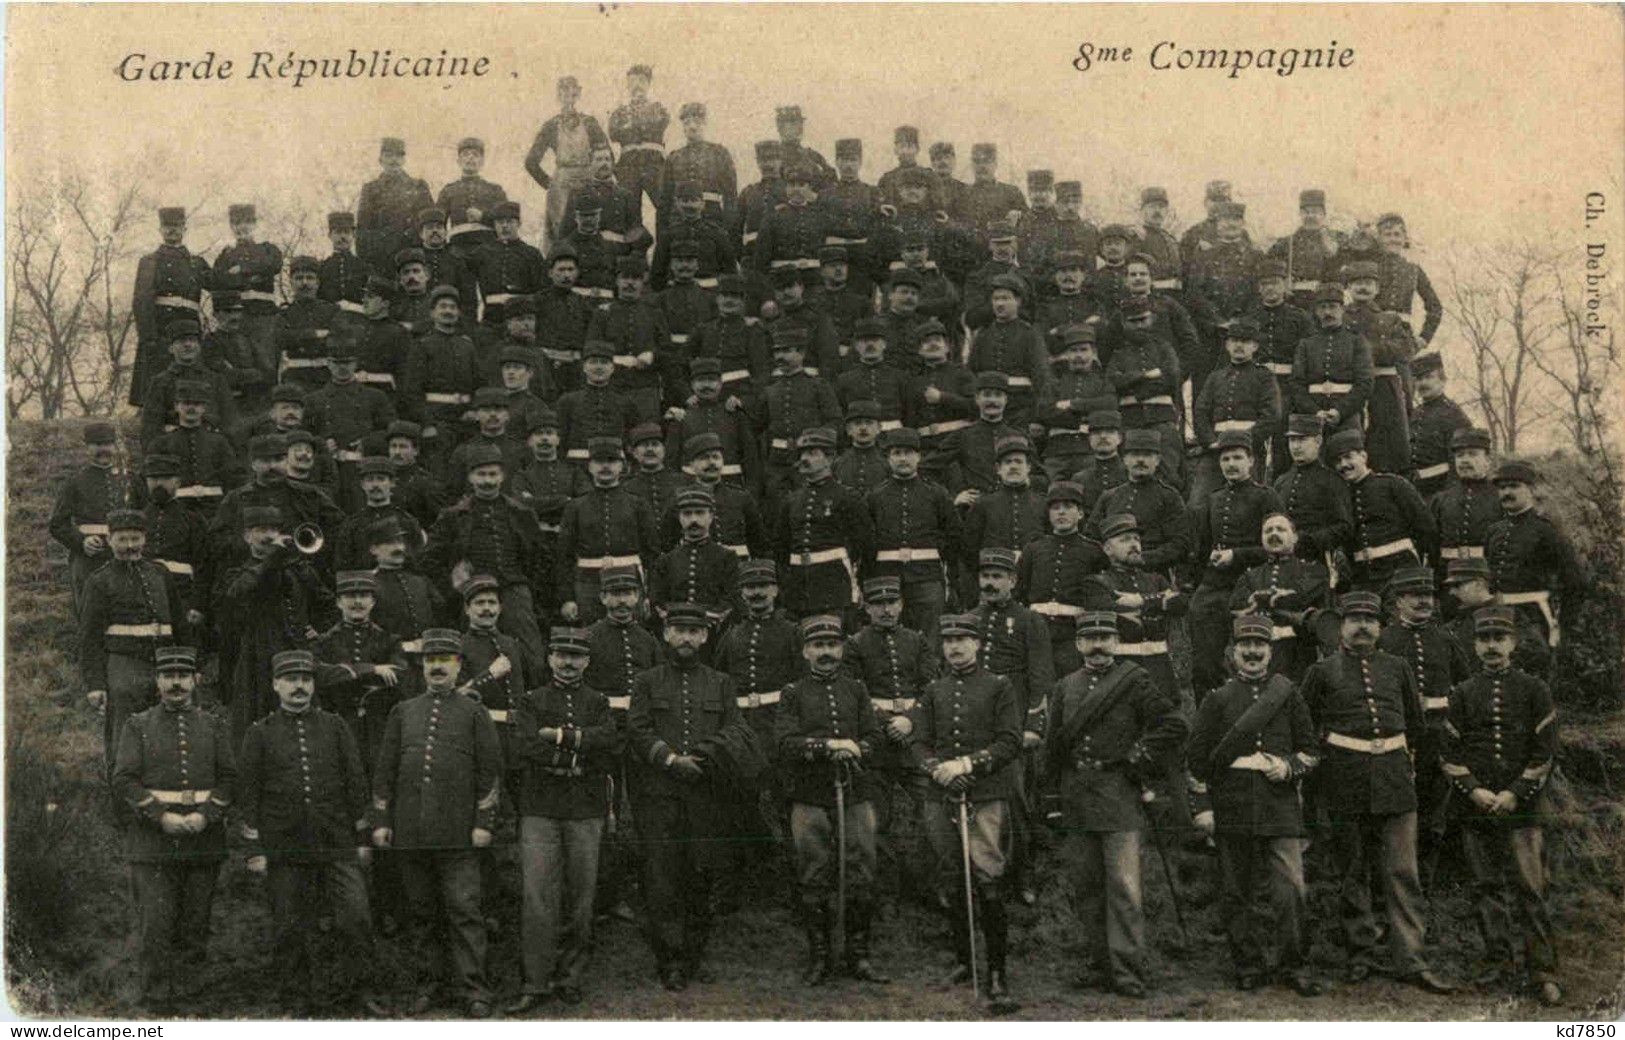 Garde Republicaine 8me Campagnie - Regimente